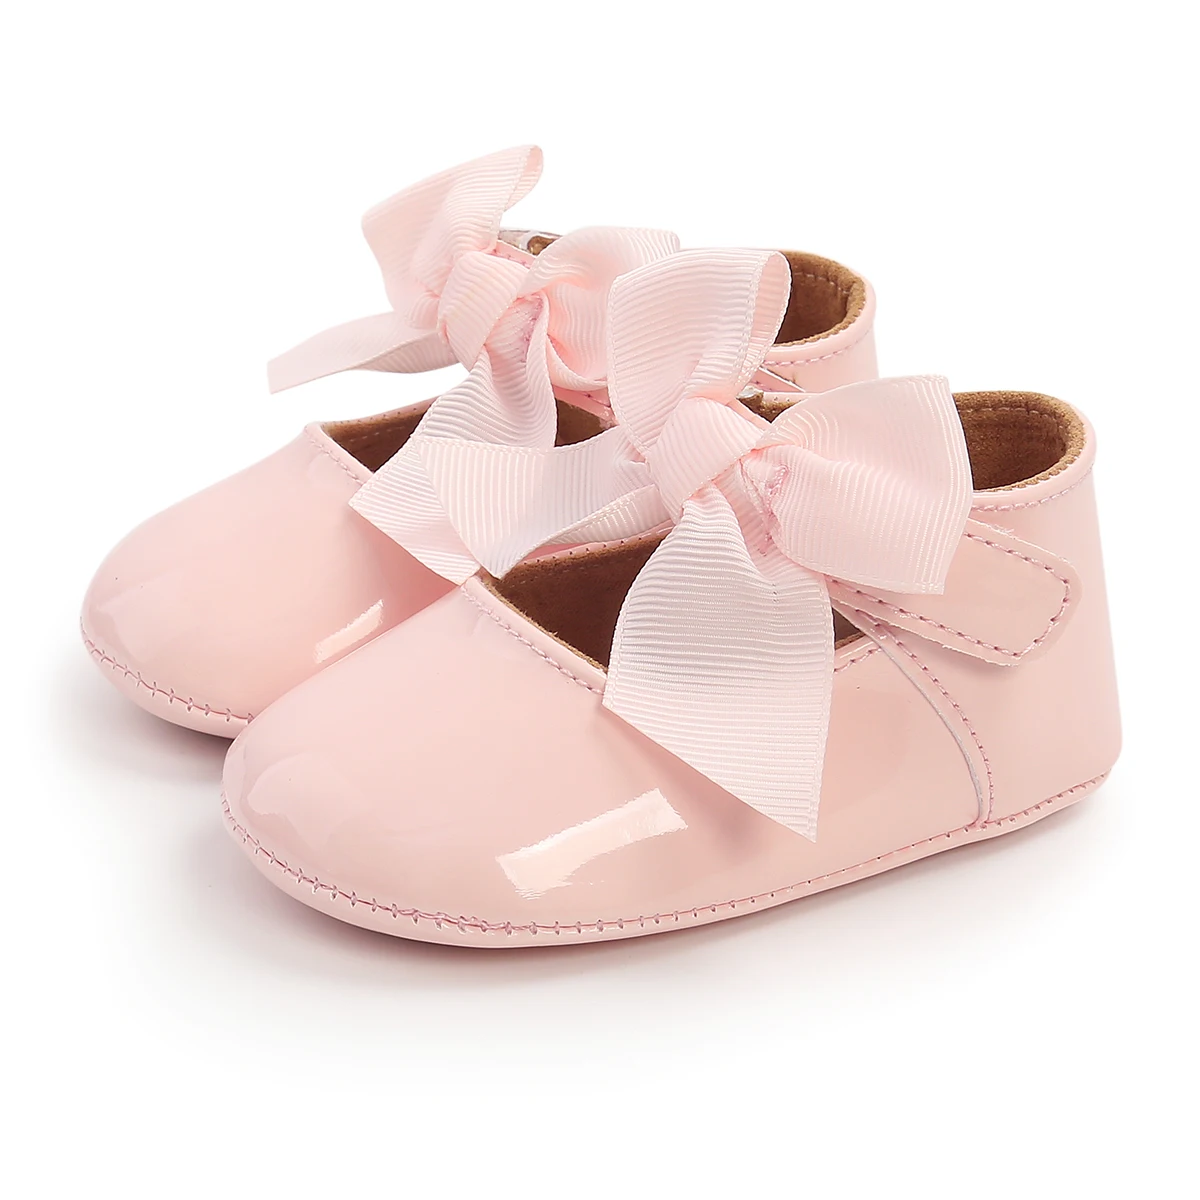 Baby Toddler Girls Princess Grib Shoe Leather Sole Sneaker Christening Pram KN 